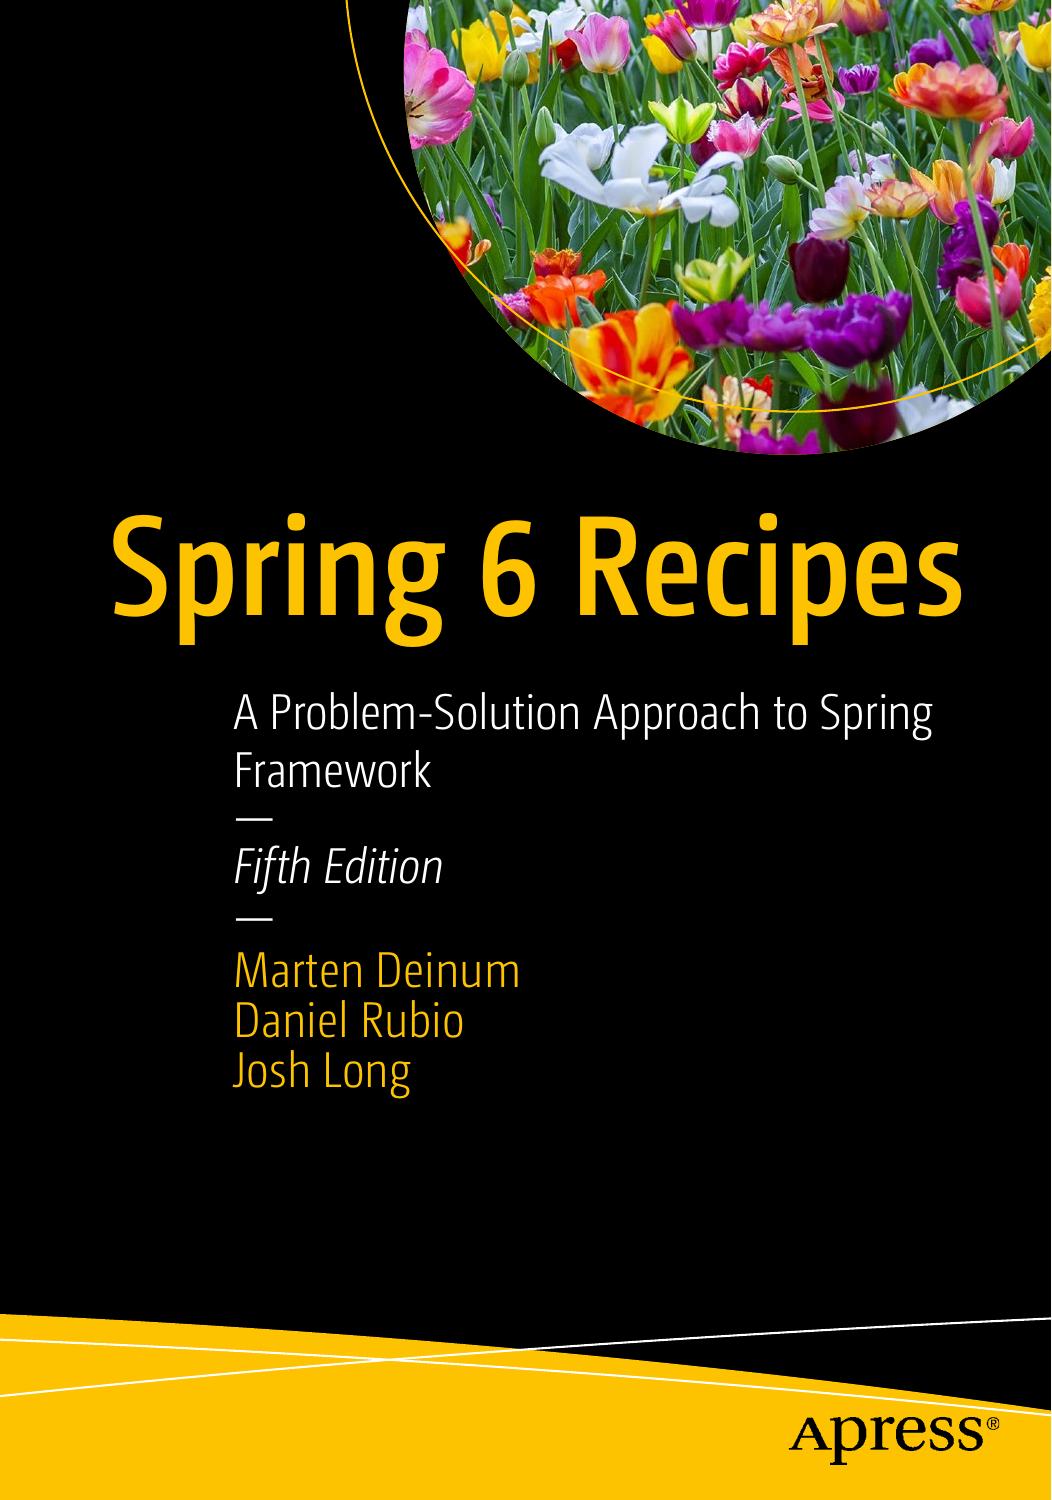 Spring 6 Recipes: A Problem-Solution Approach to Spring Framework by Marten Deinum Daniel Rubio Josh Long